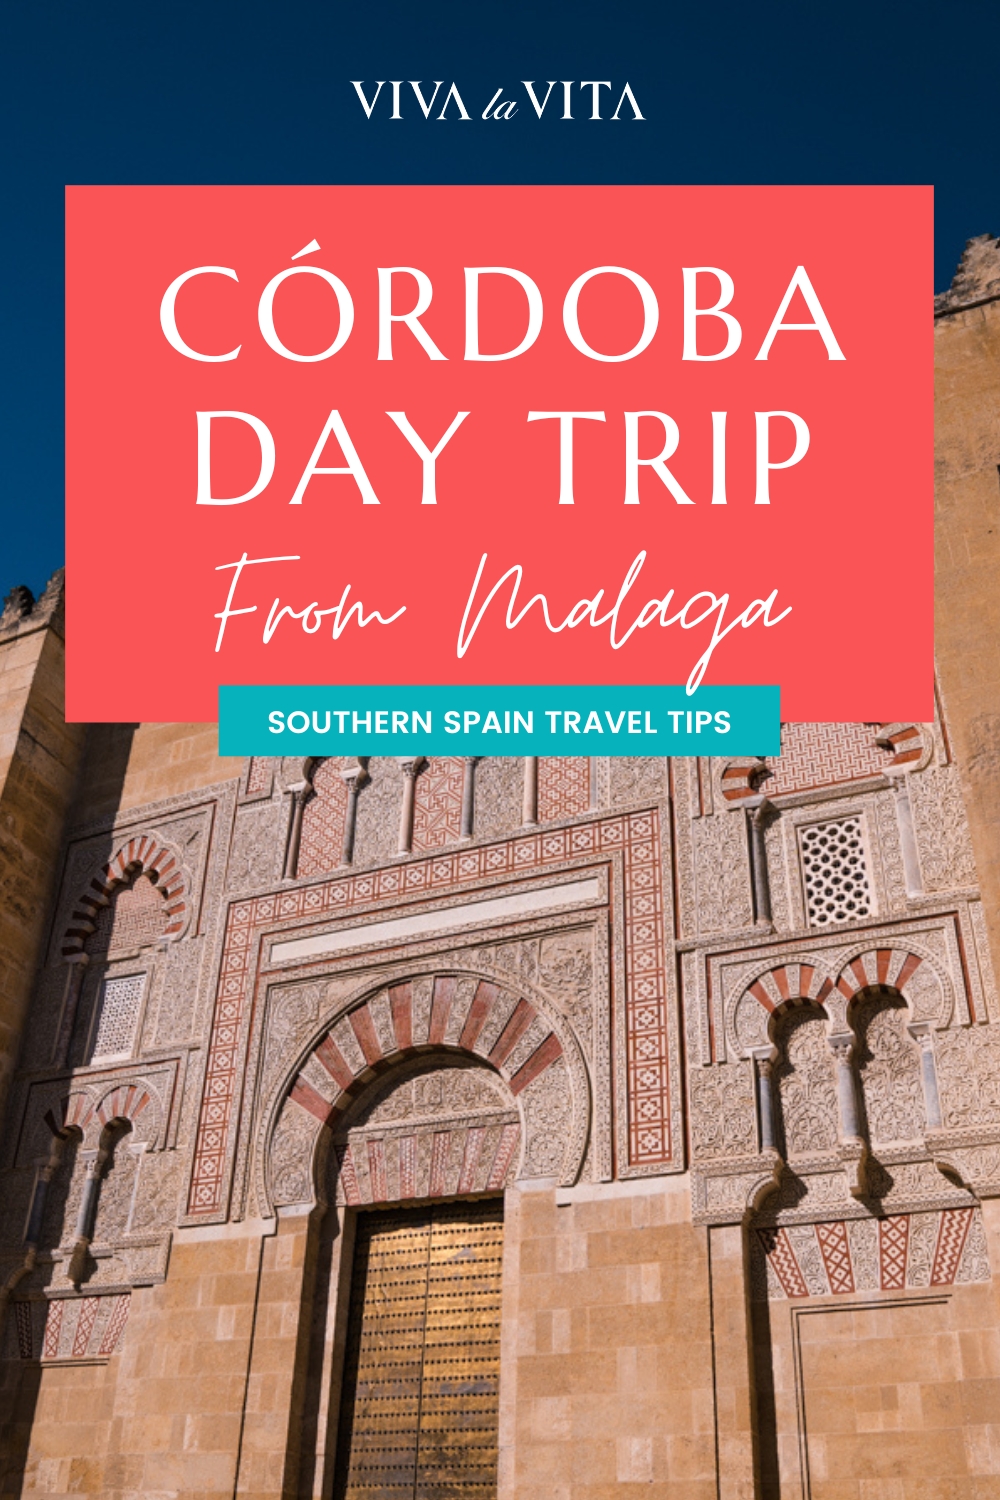 Cordoba day trip from Malaga, Spain